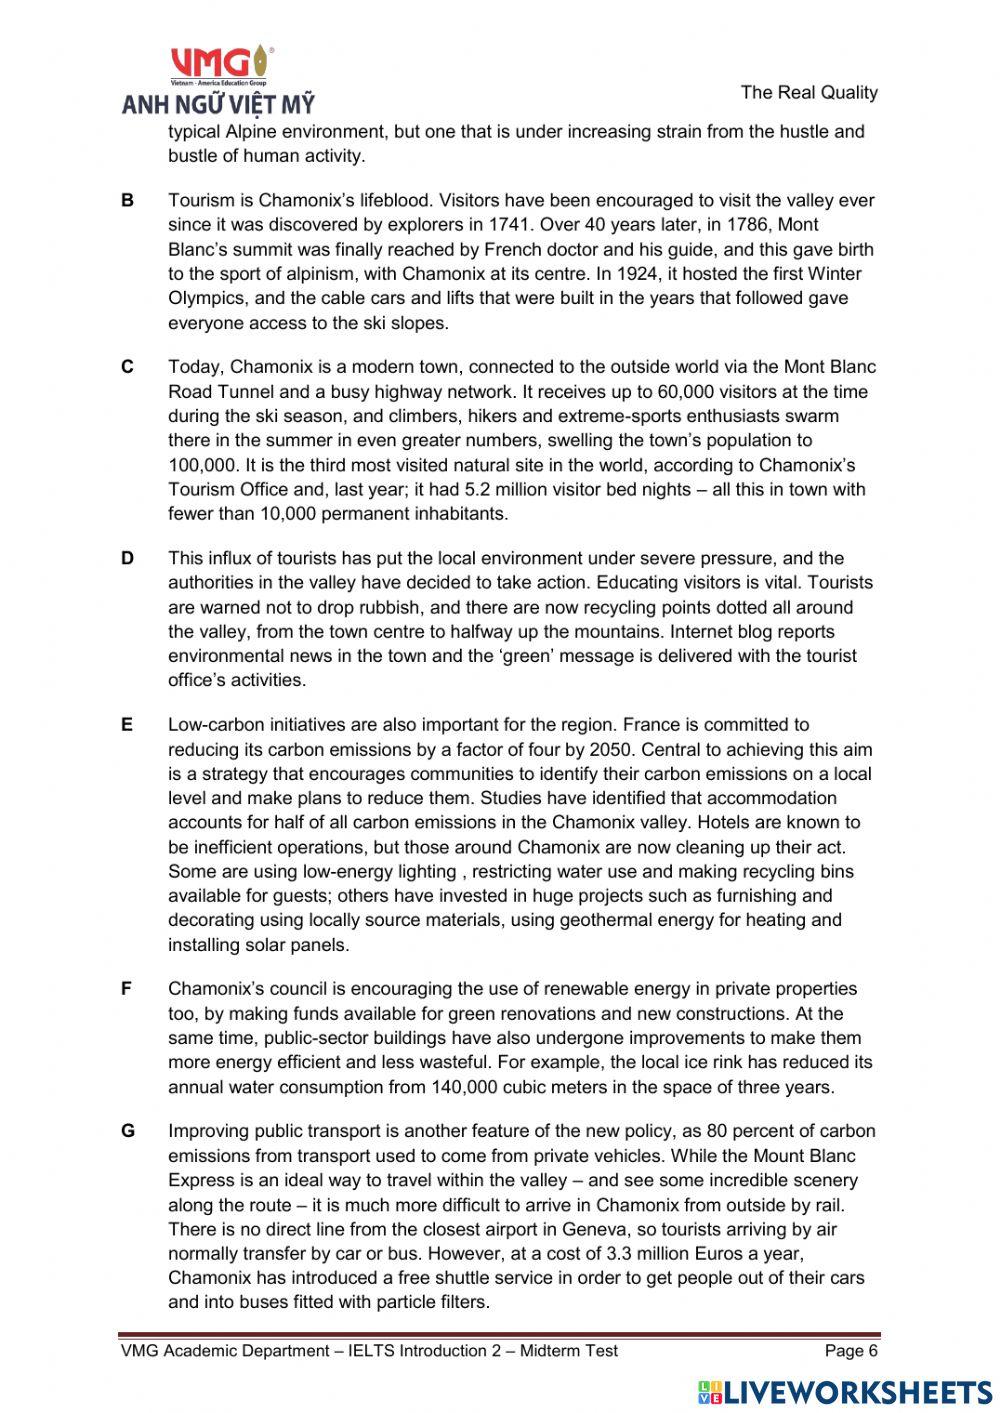 Mid Intro 2 (Reading) worksheet | Live Worksheets